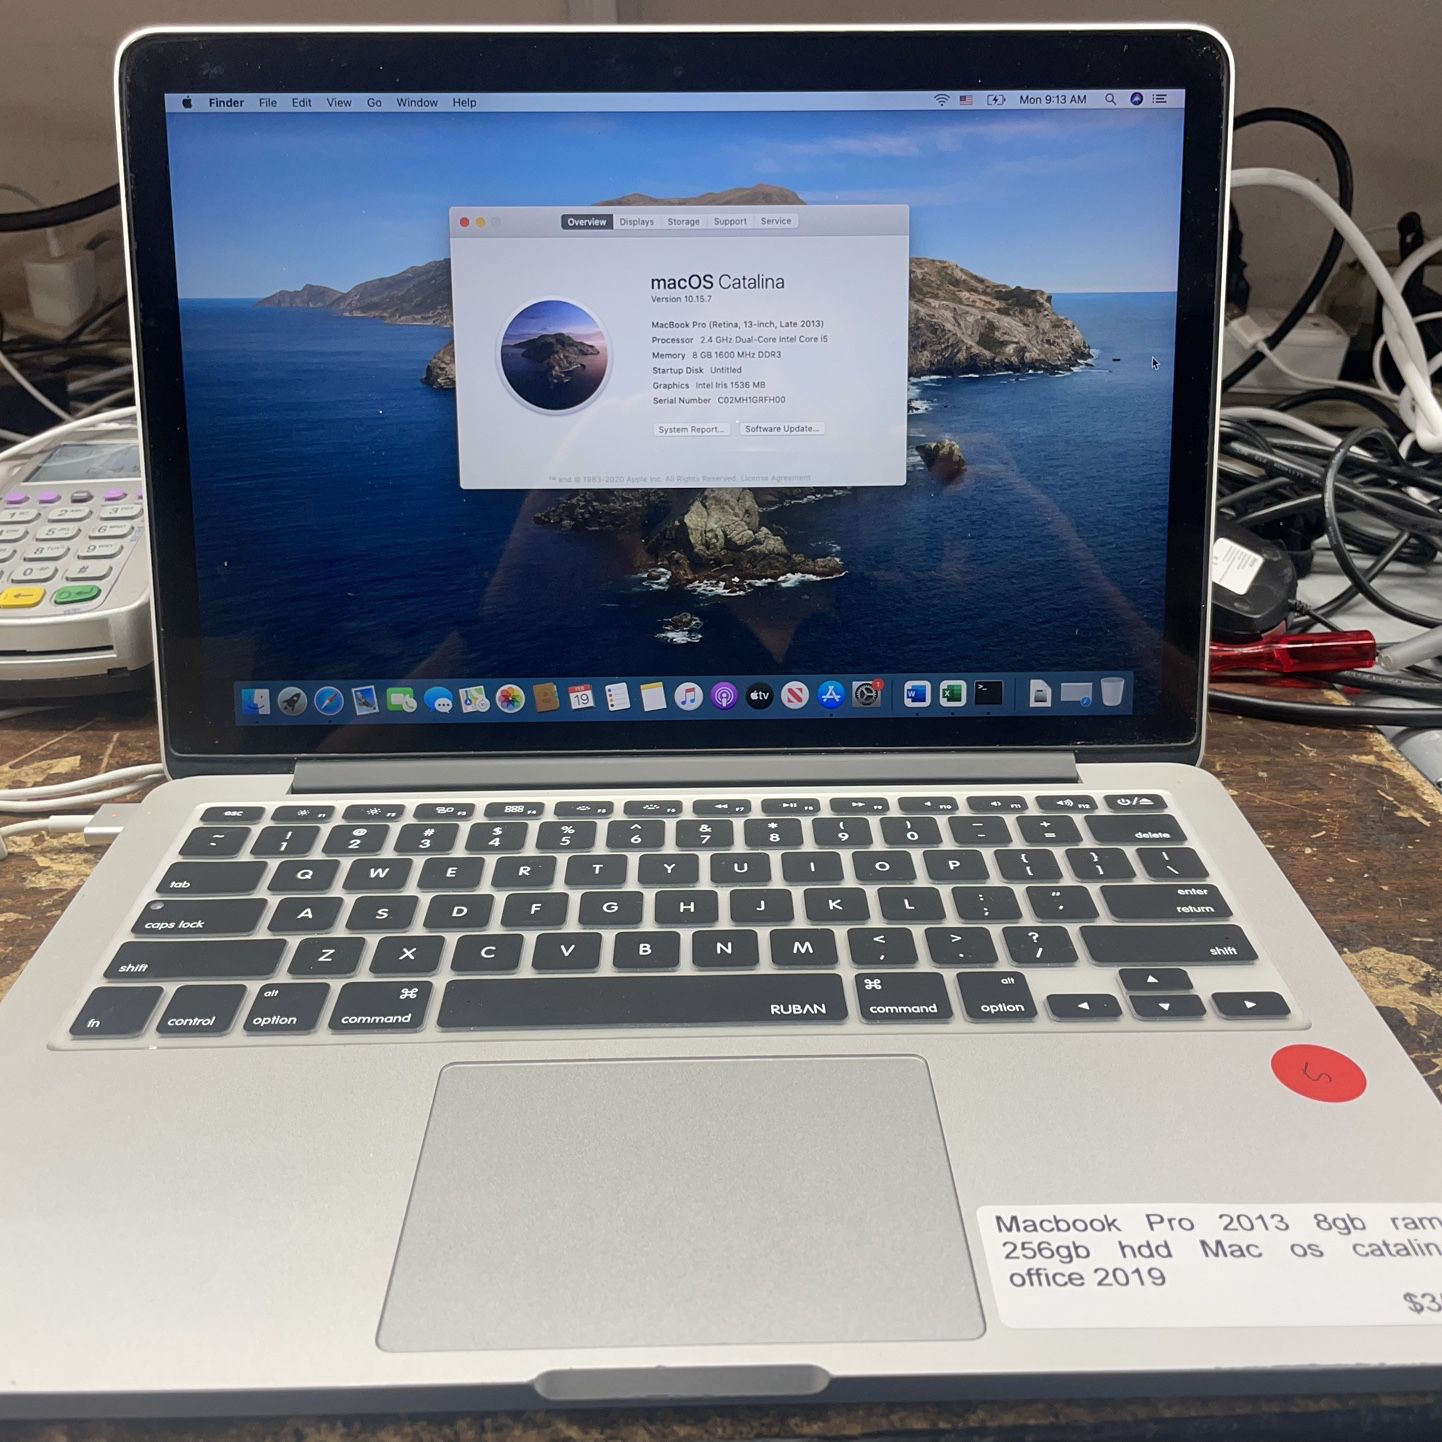 macbook pro 2013 8 gb ram 256gb hdd mac os catalina office 2019